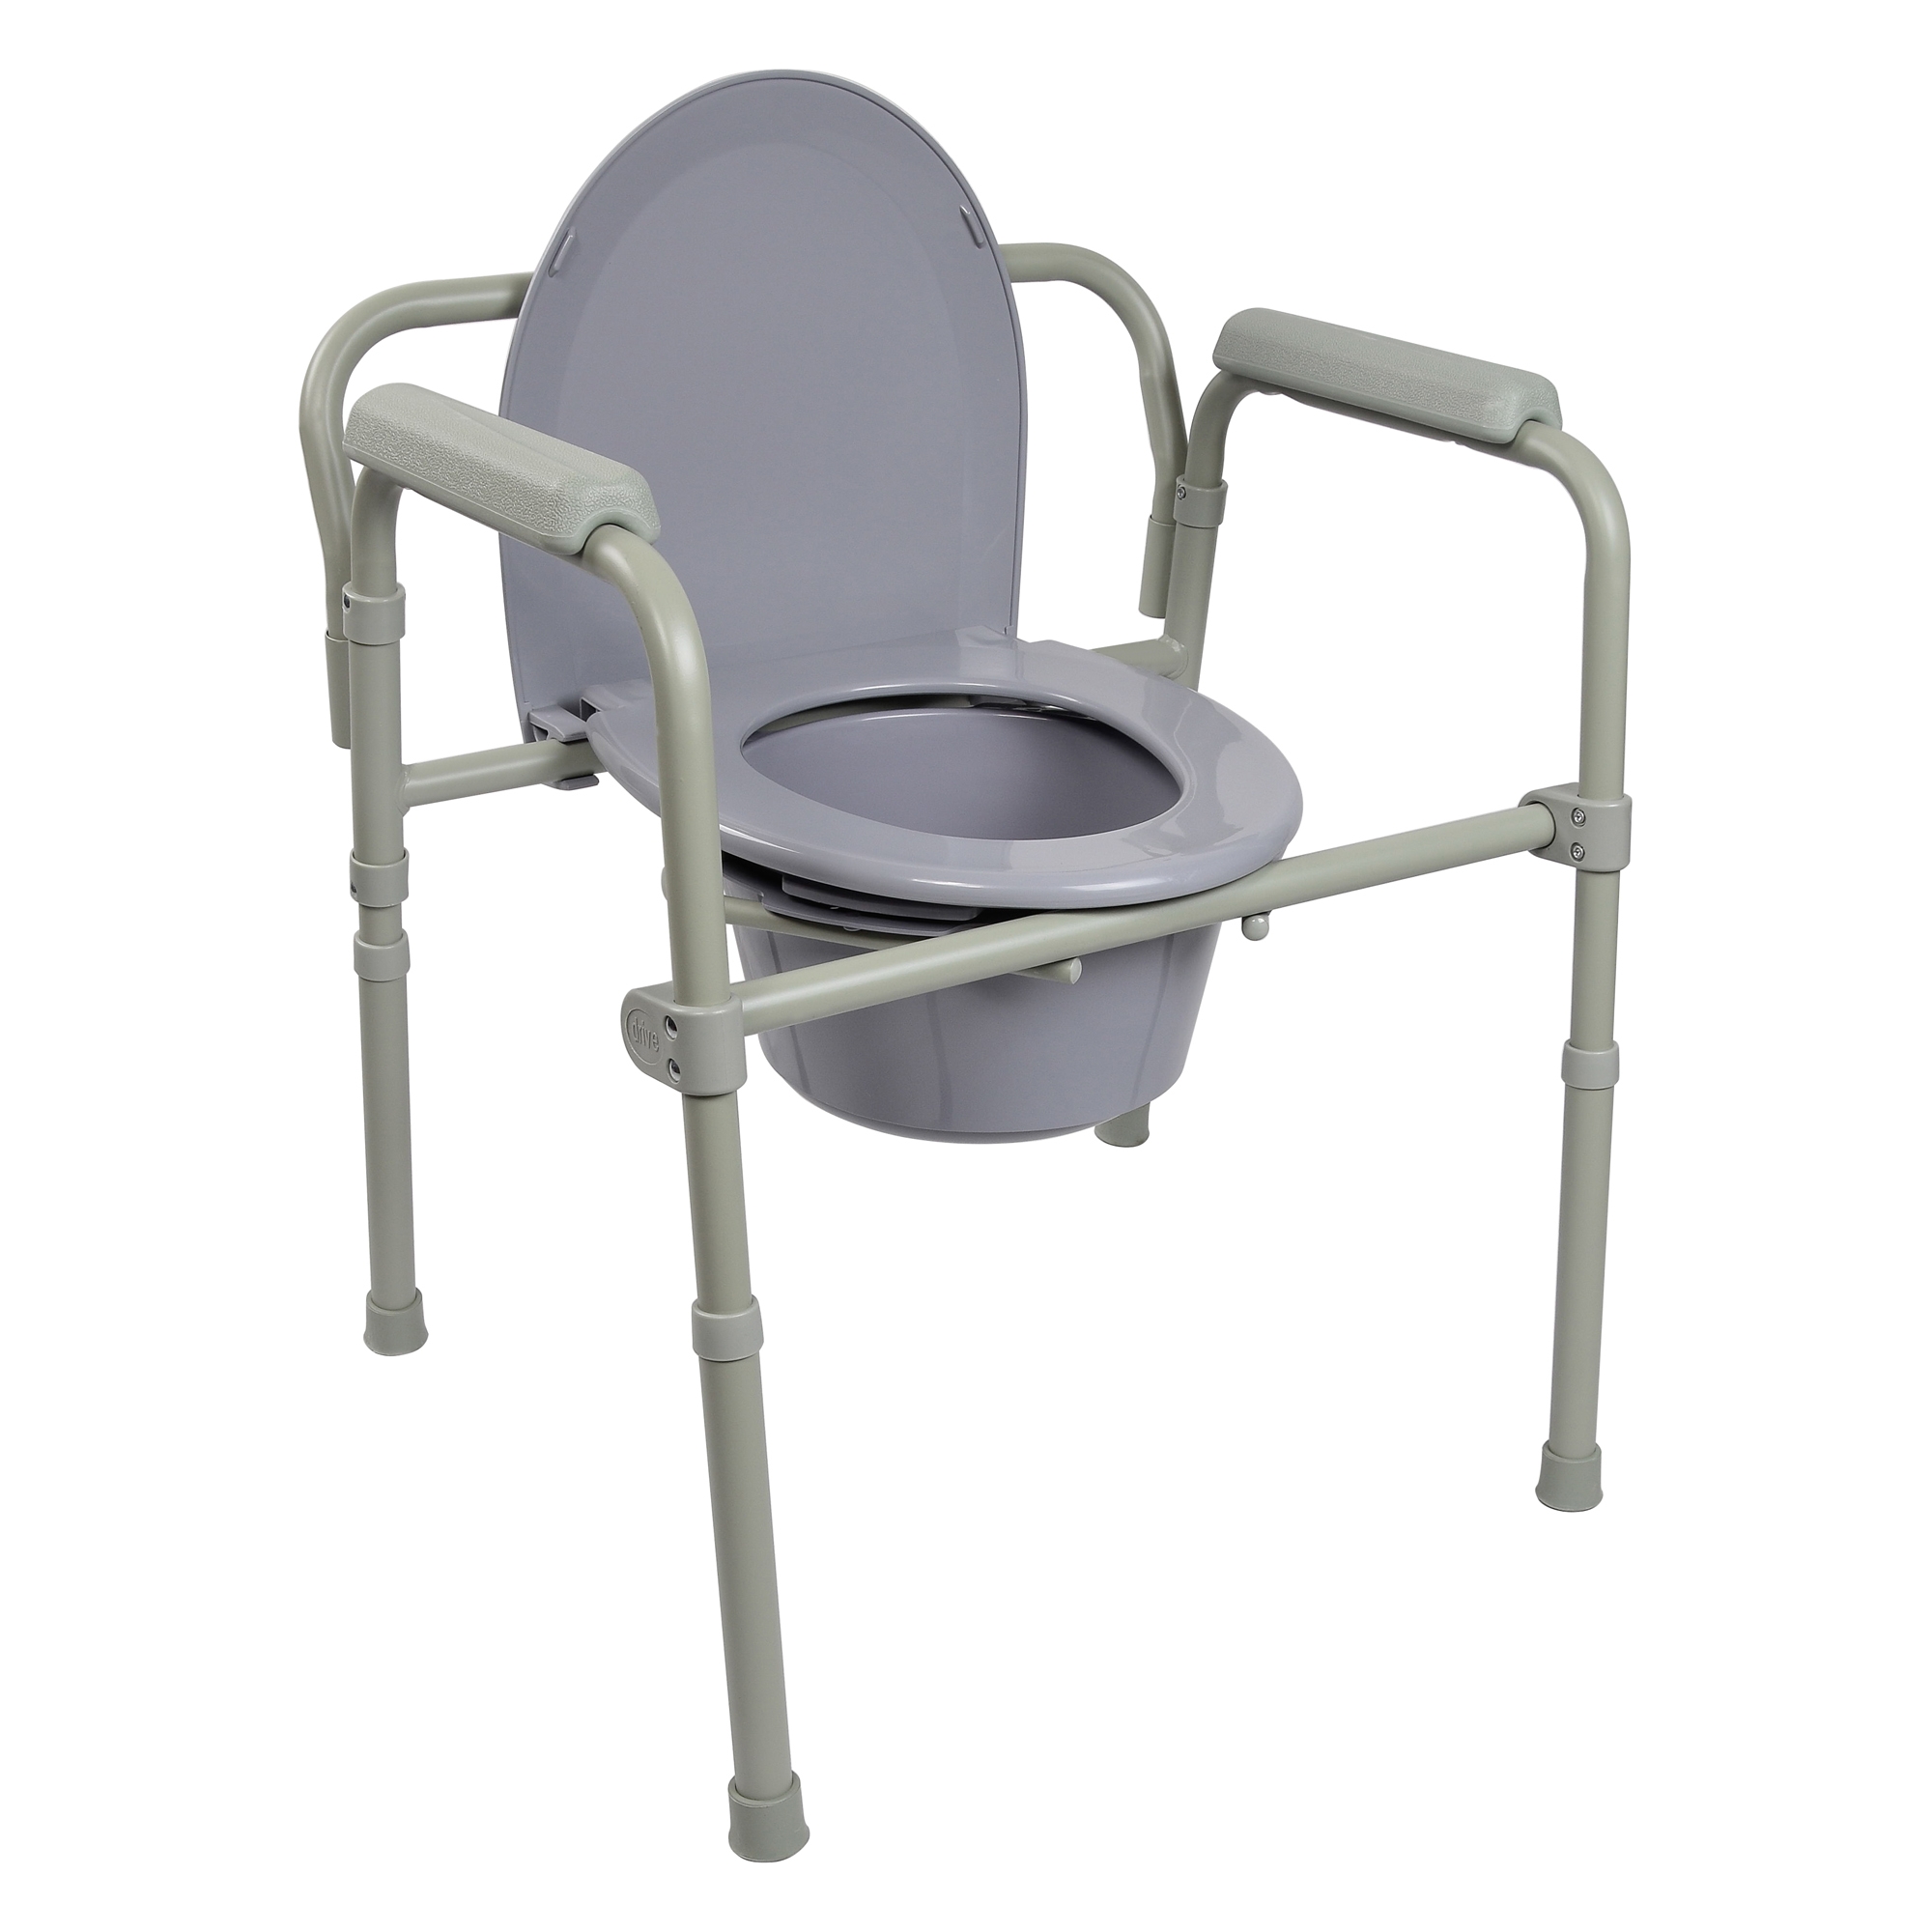 McKesson Folding Commode Chair